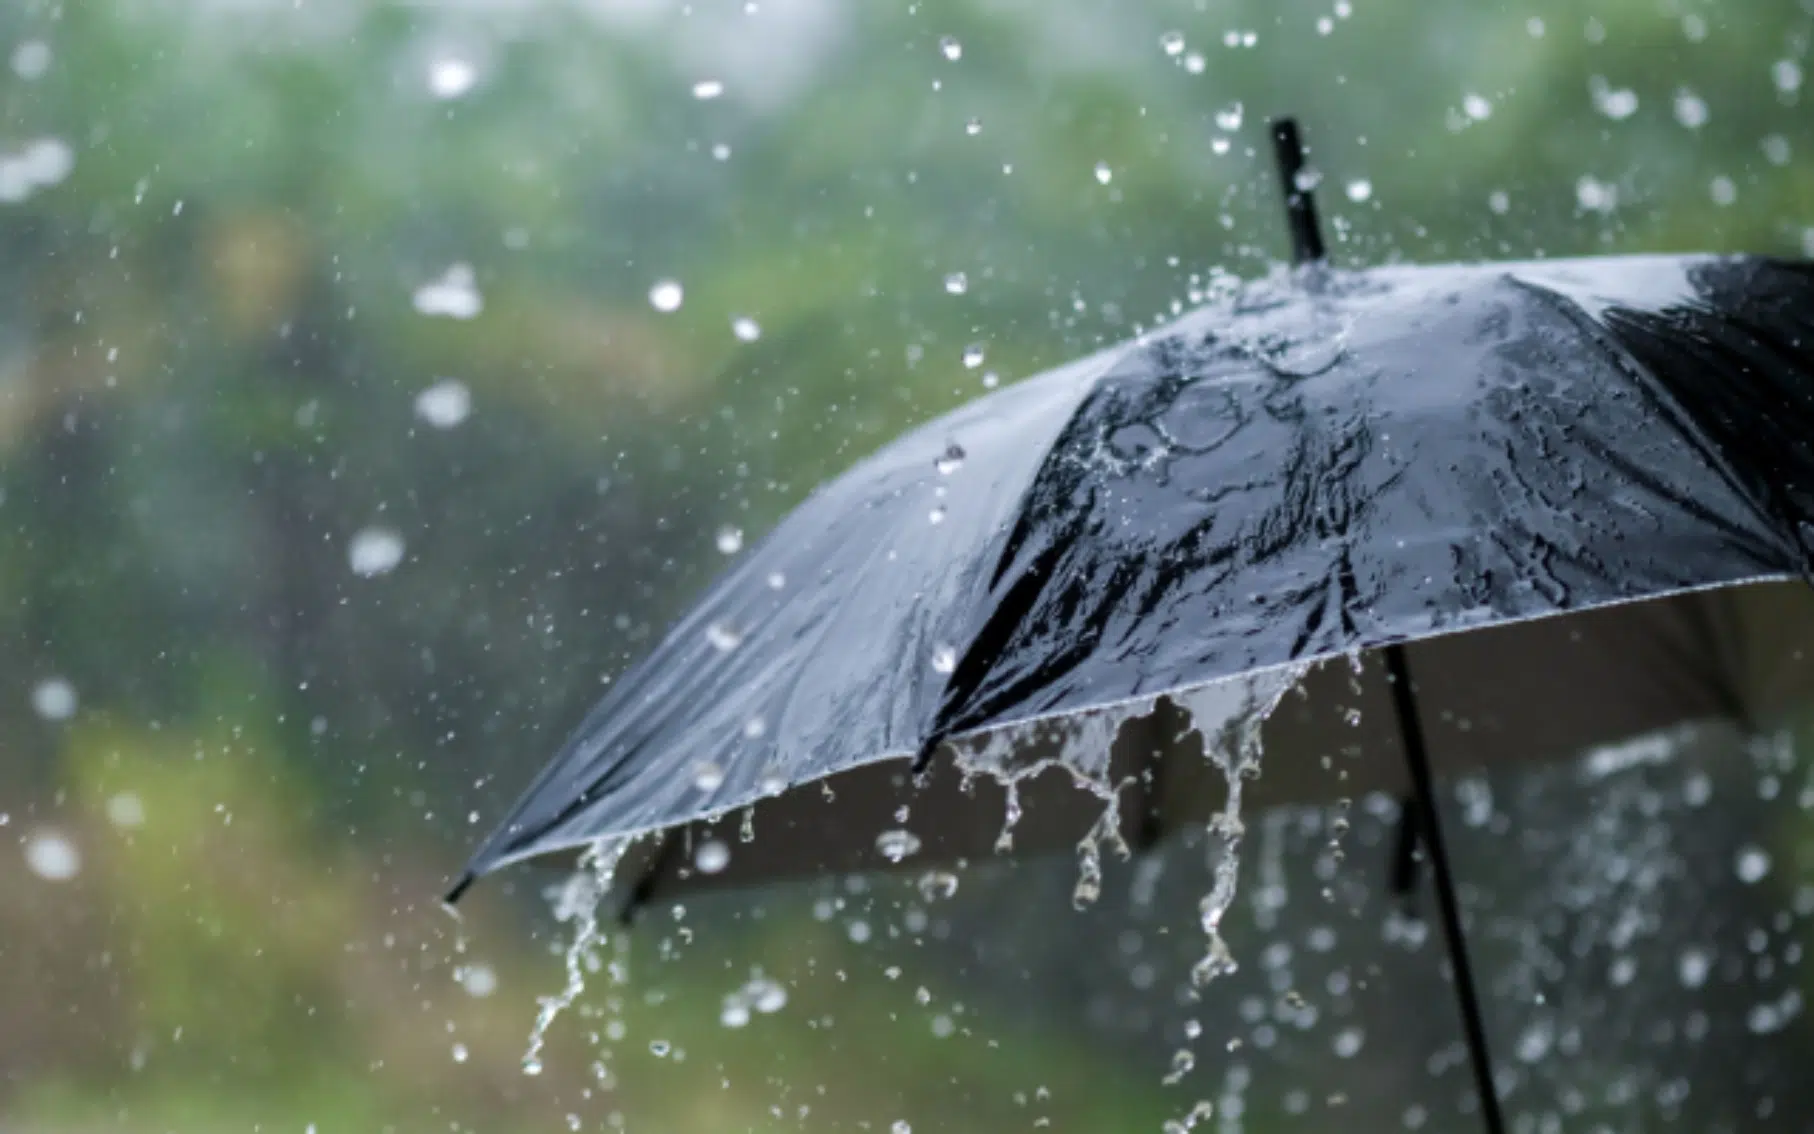 Imd issues heavy rainfall warning to Karnataka